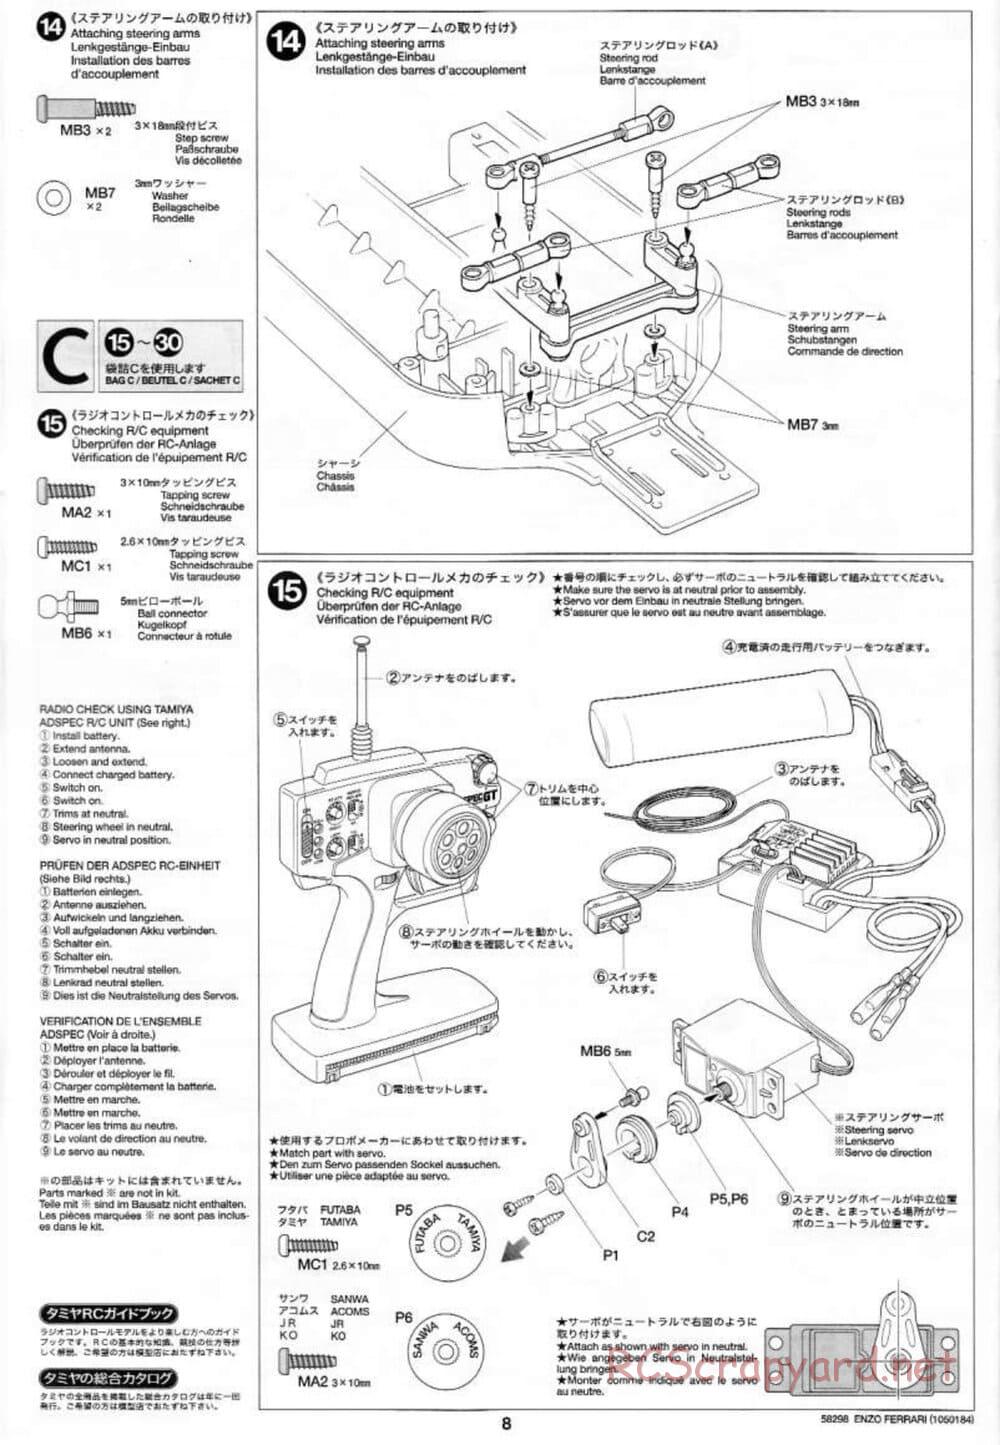 Tamiya - Enzo Ferrari - TB-01 Chassis - Manual - Page 8